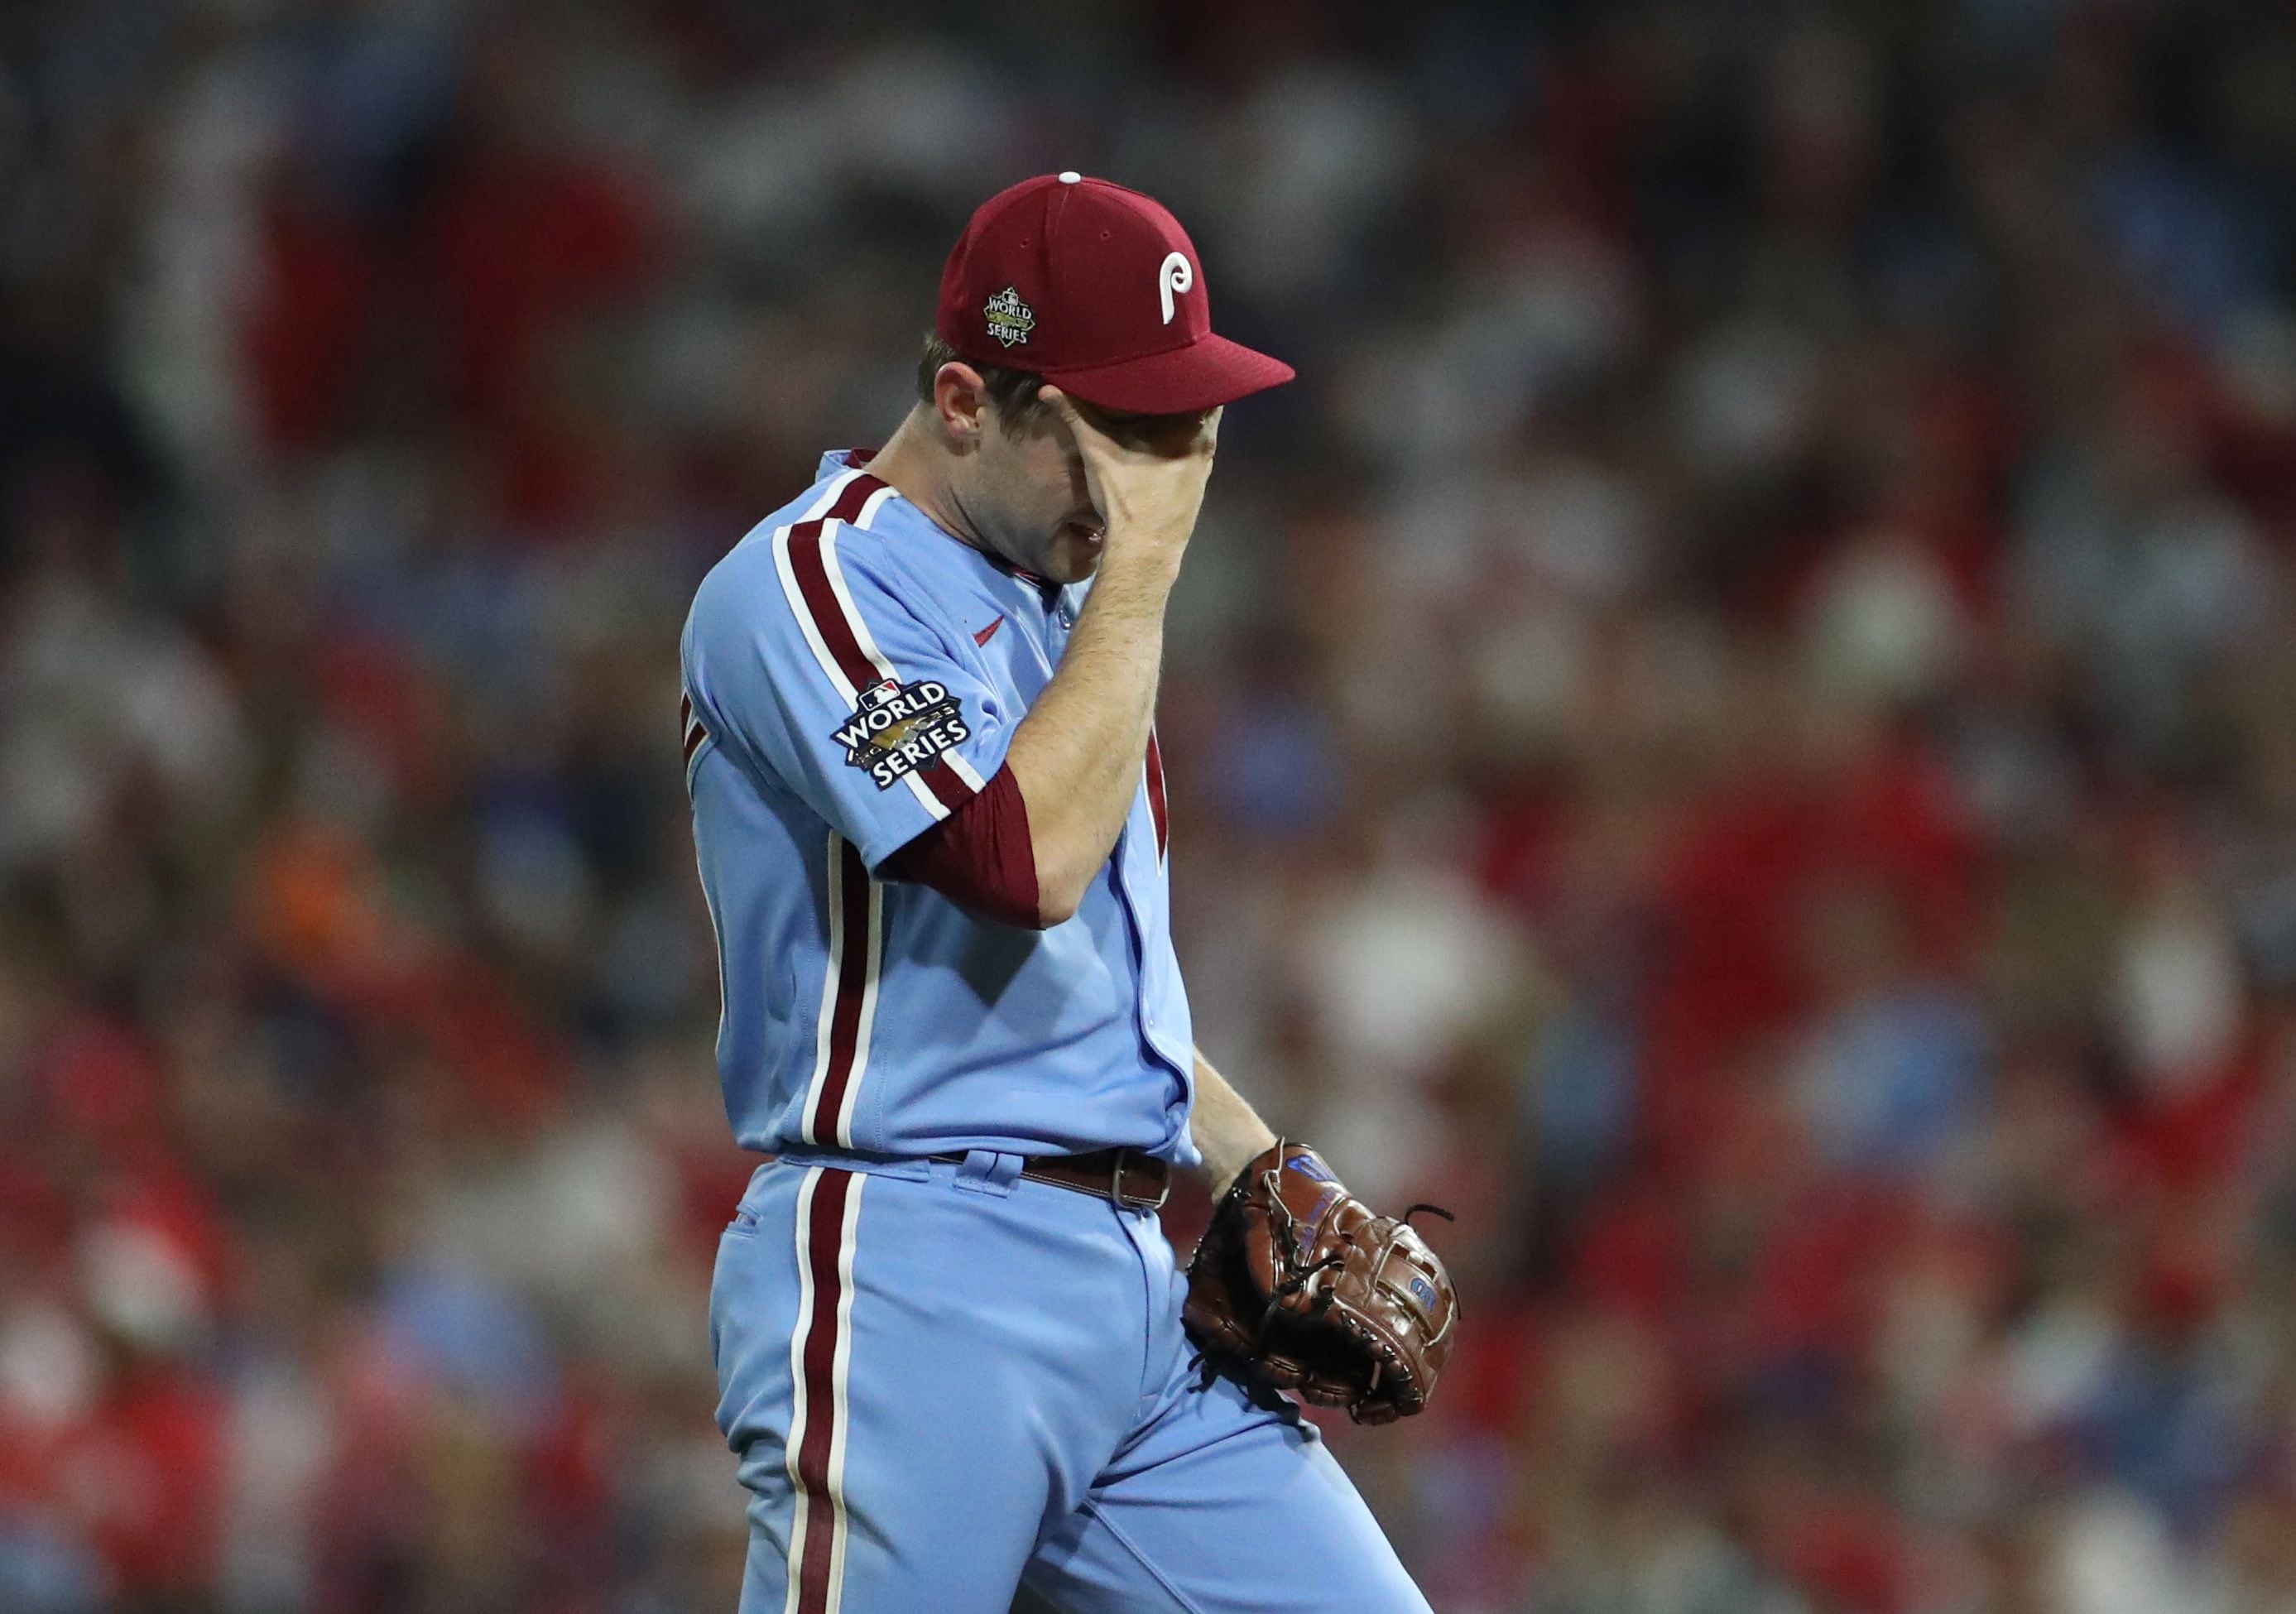 Kyle Schwarber prepared for emotional return in World Series